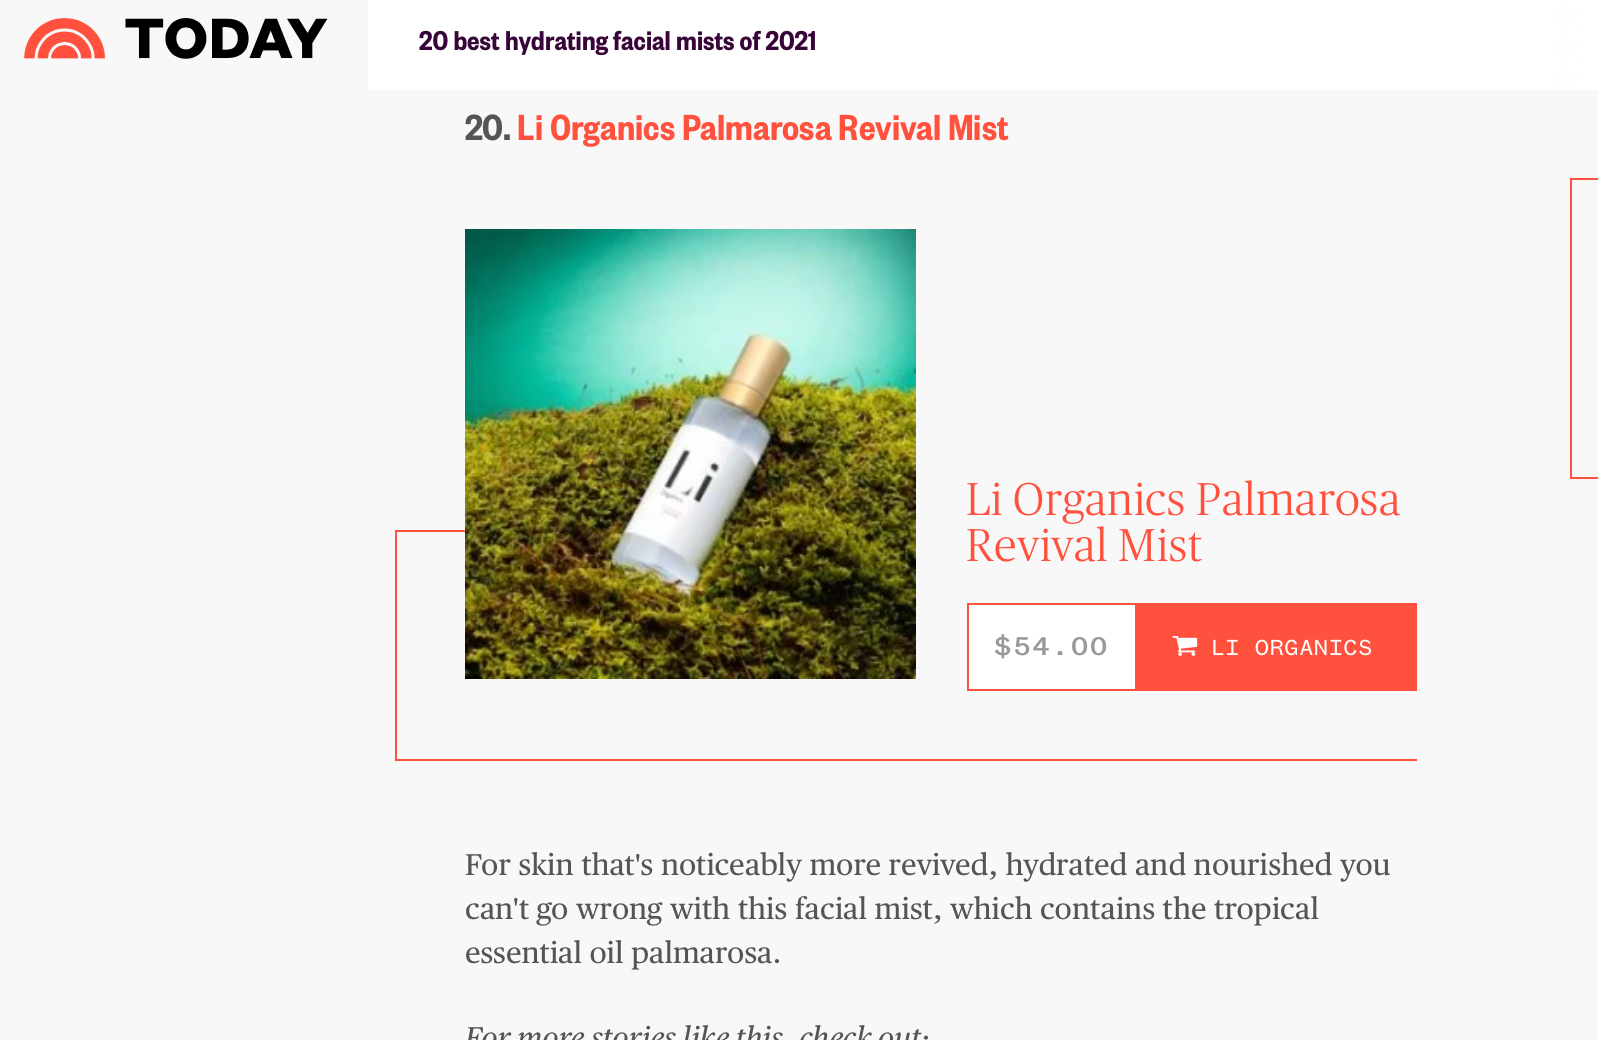 palmarosa revival mist. Best hydrating facial mist. Antioxidant rich, refreshing, revitalizing to skin, wake up skin.